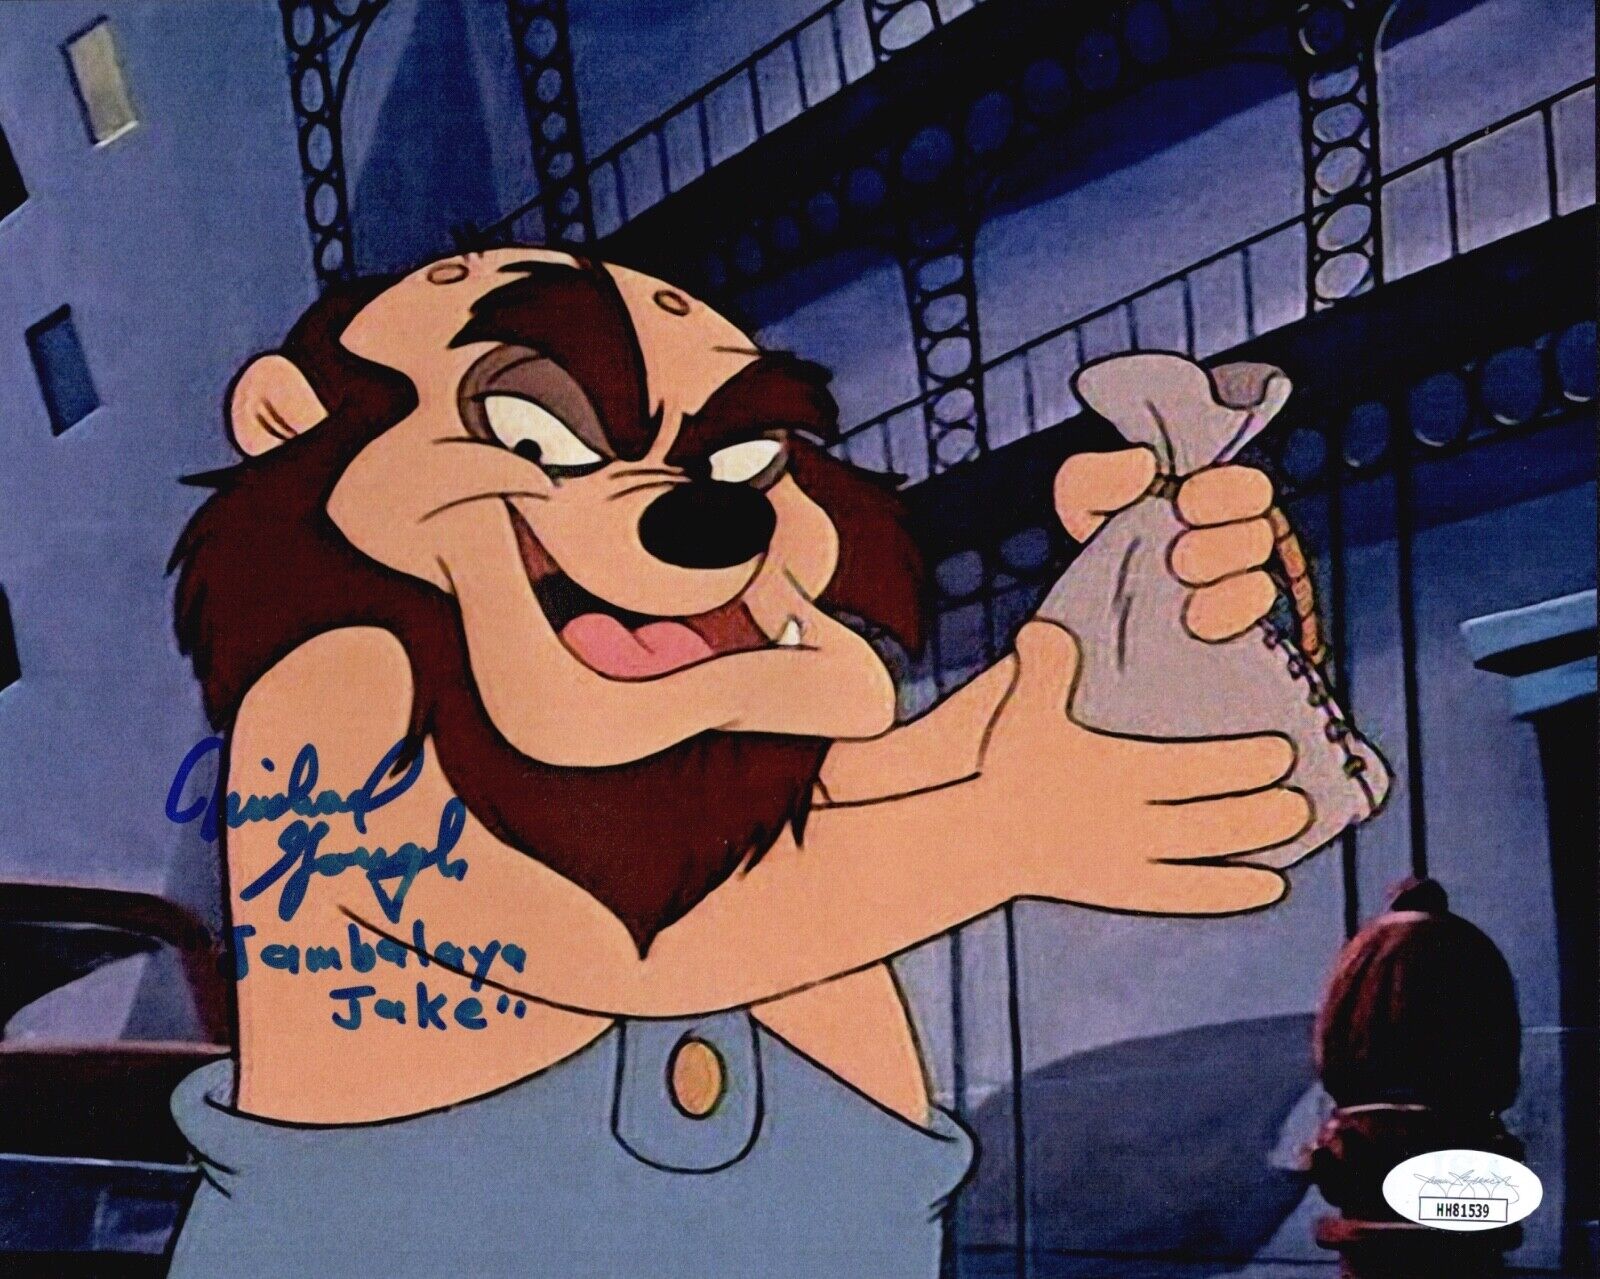 MICHAEL GOUGH Signed 8x10 Photo Poster painting Jambalaya Jake DARKWING Disney Autograph JSA COA